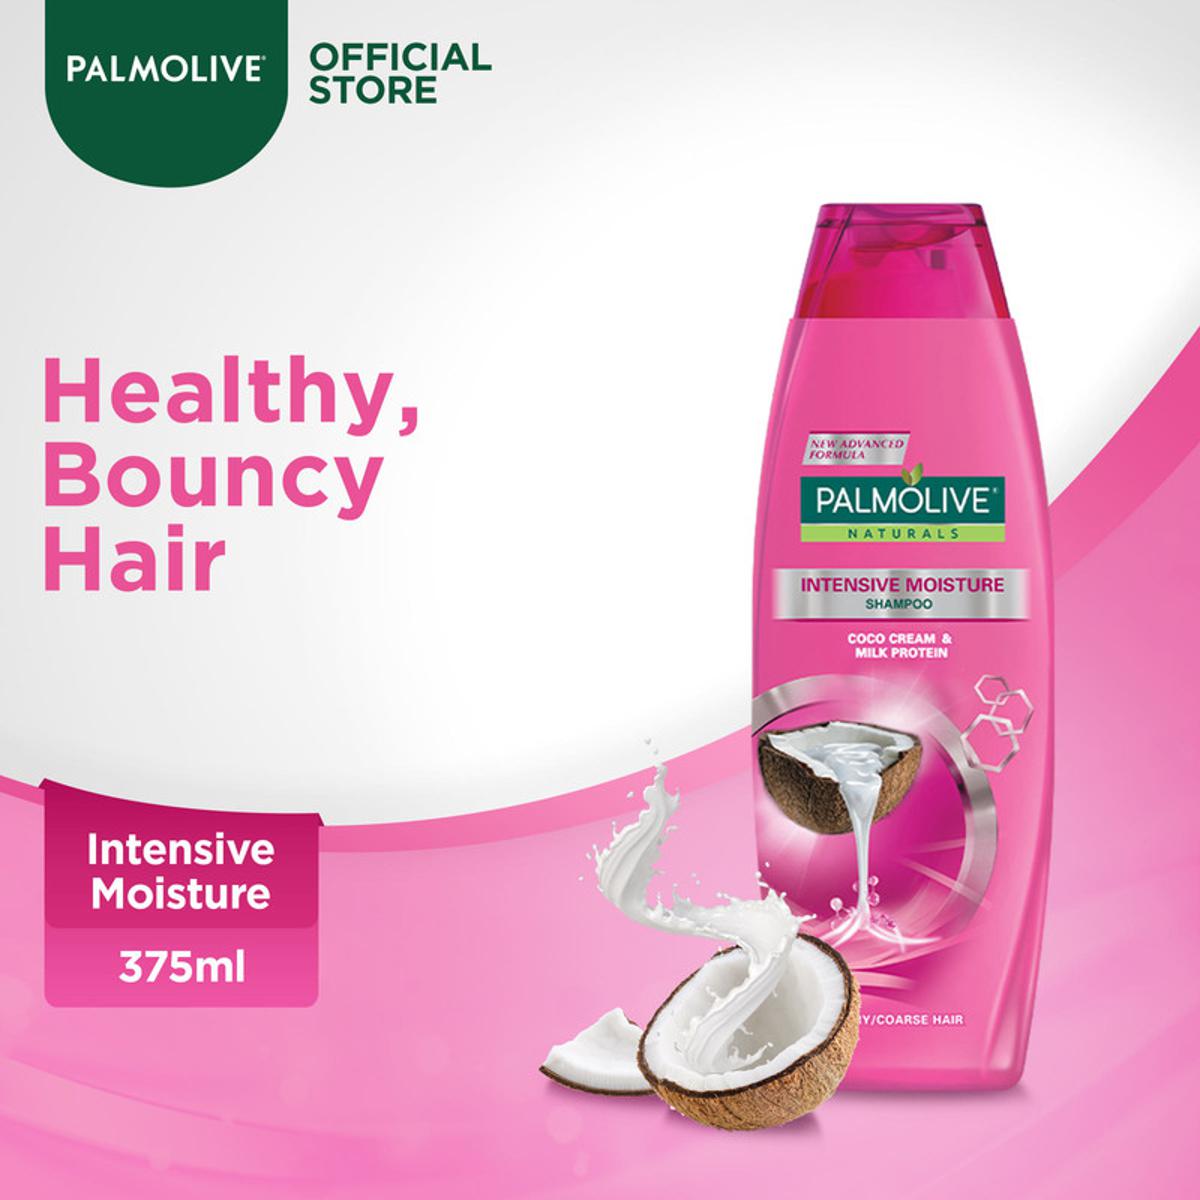 Palmolive Naturals Intensive Moisture Shampoo 375ml